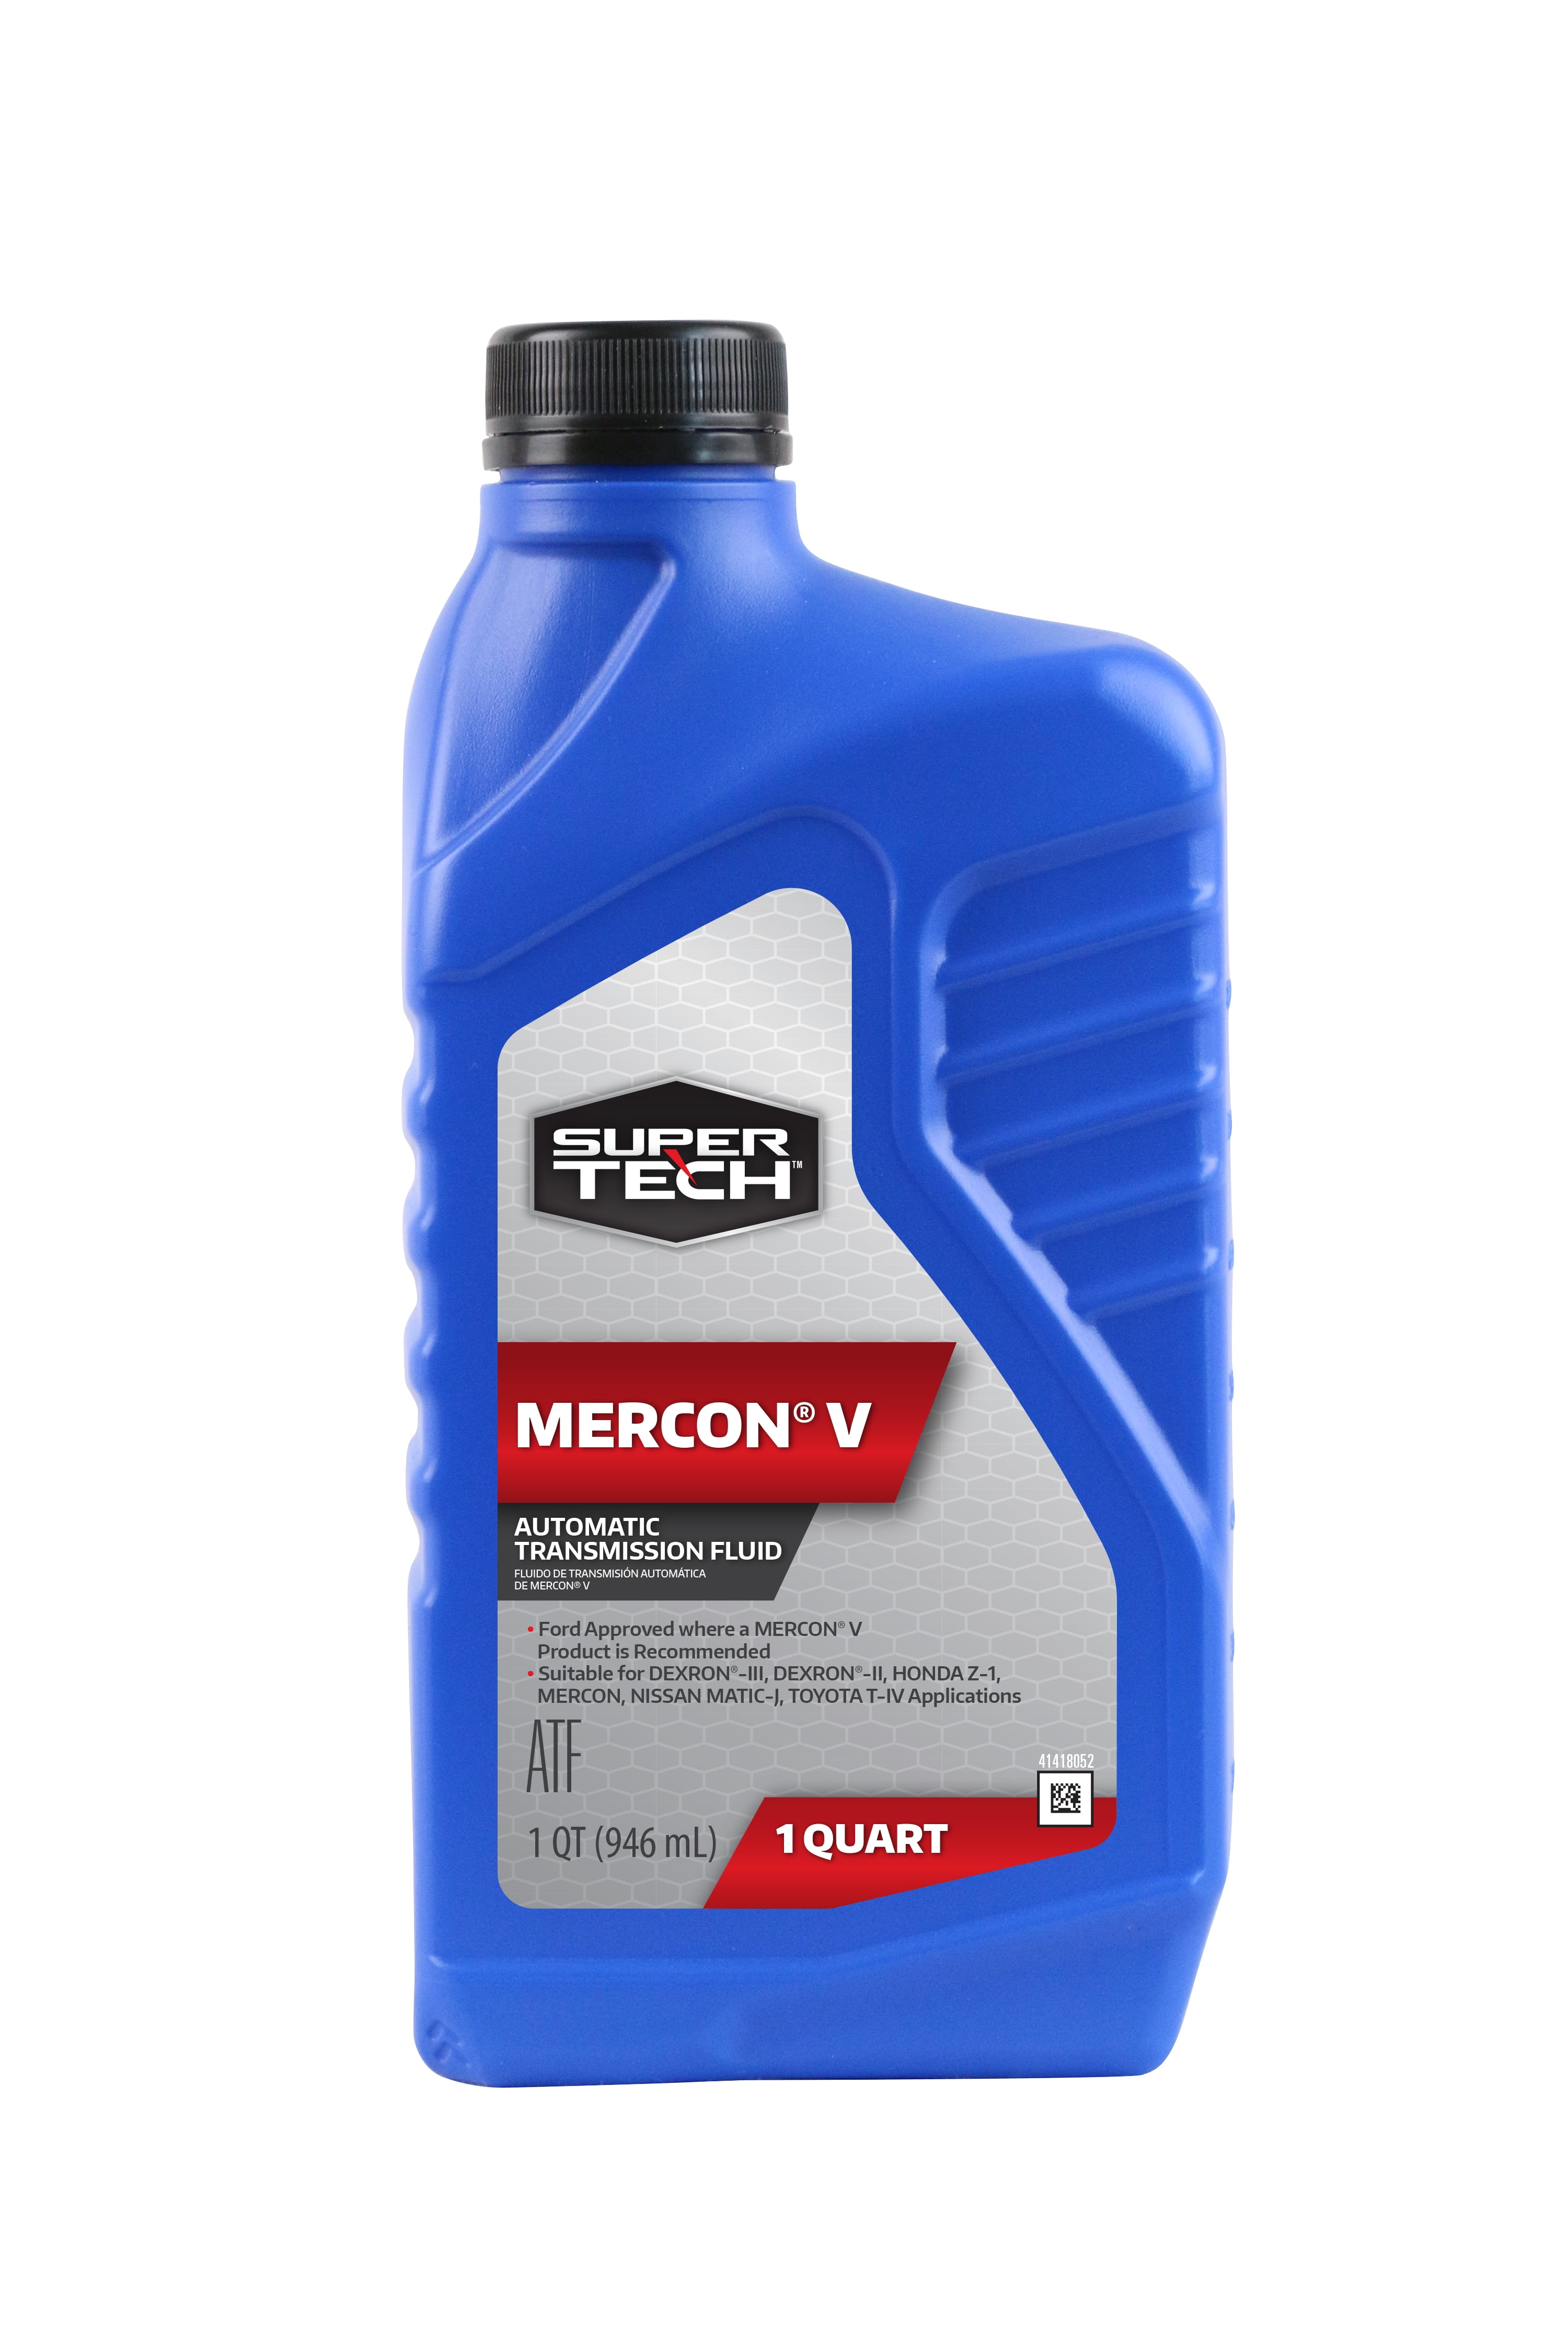 Super Tech MERCON V Automatic Transmission Fluid, 1 Quart